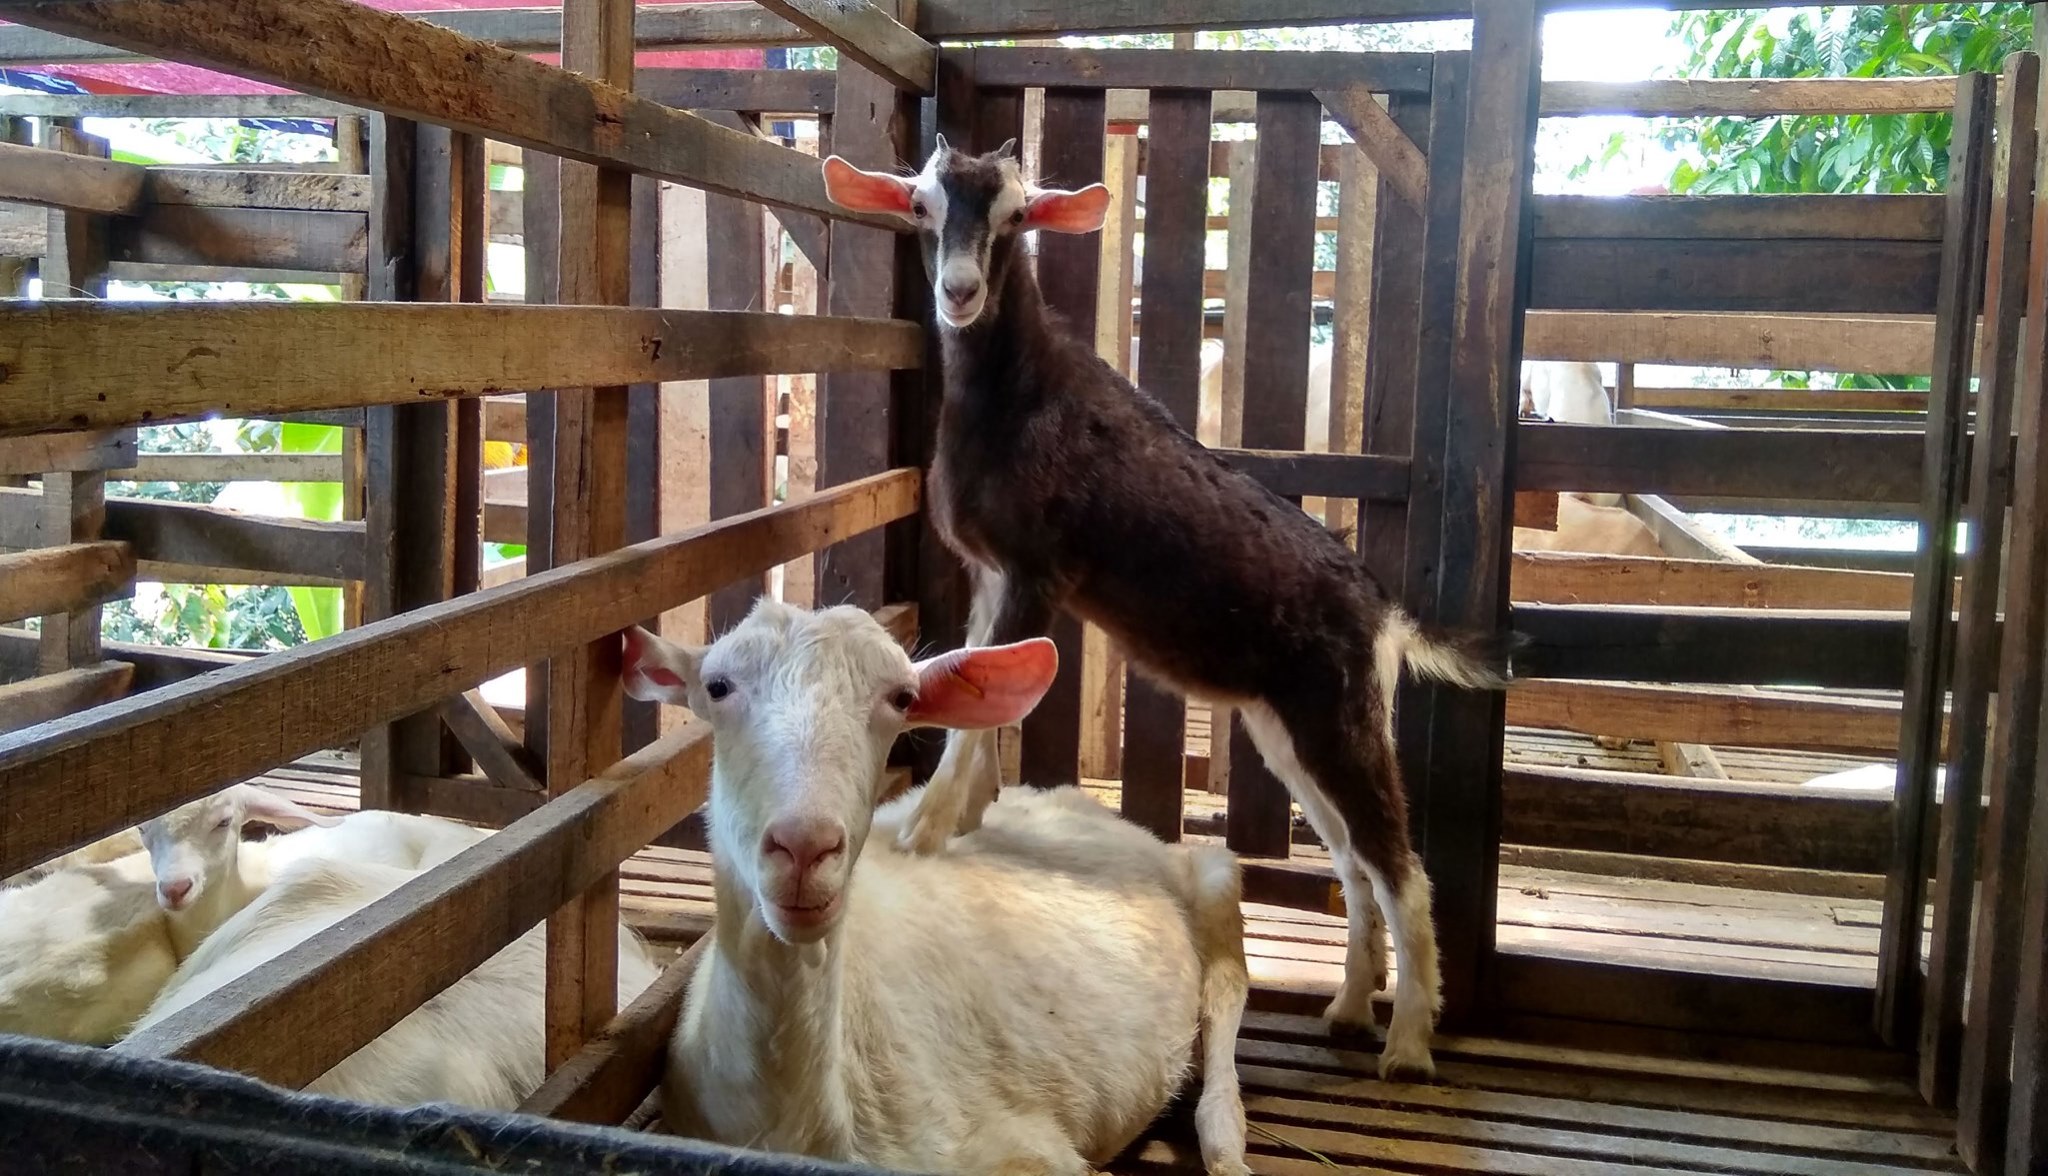 Image from Glamgoat Aman Dusun Farm Retreat (Facebook)